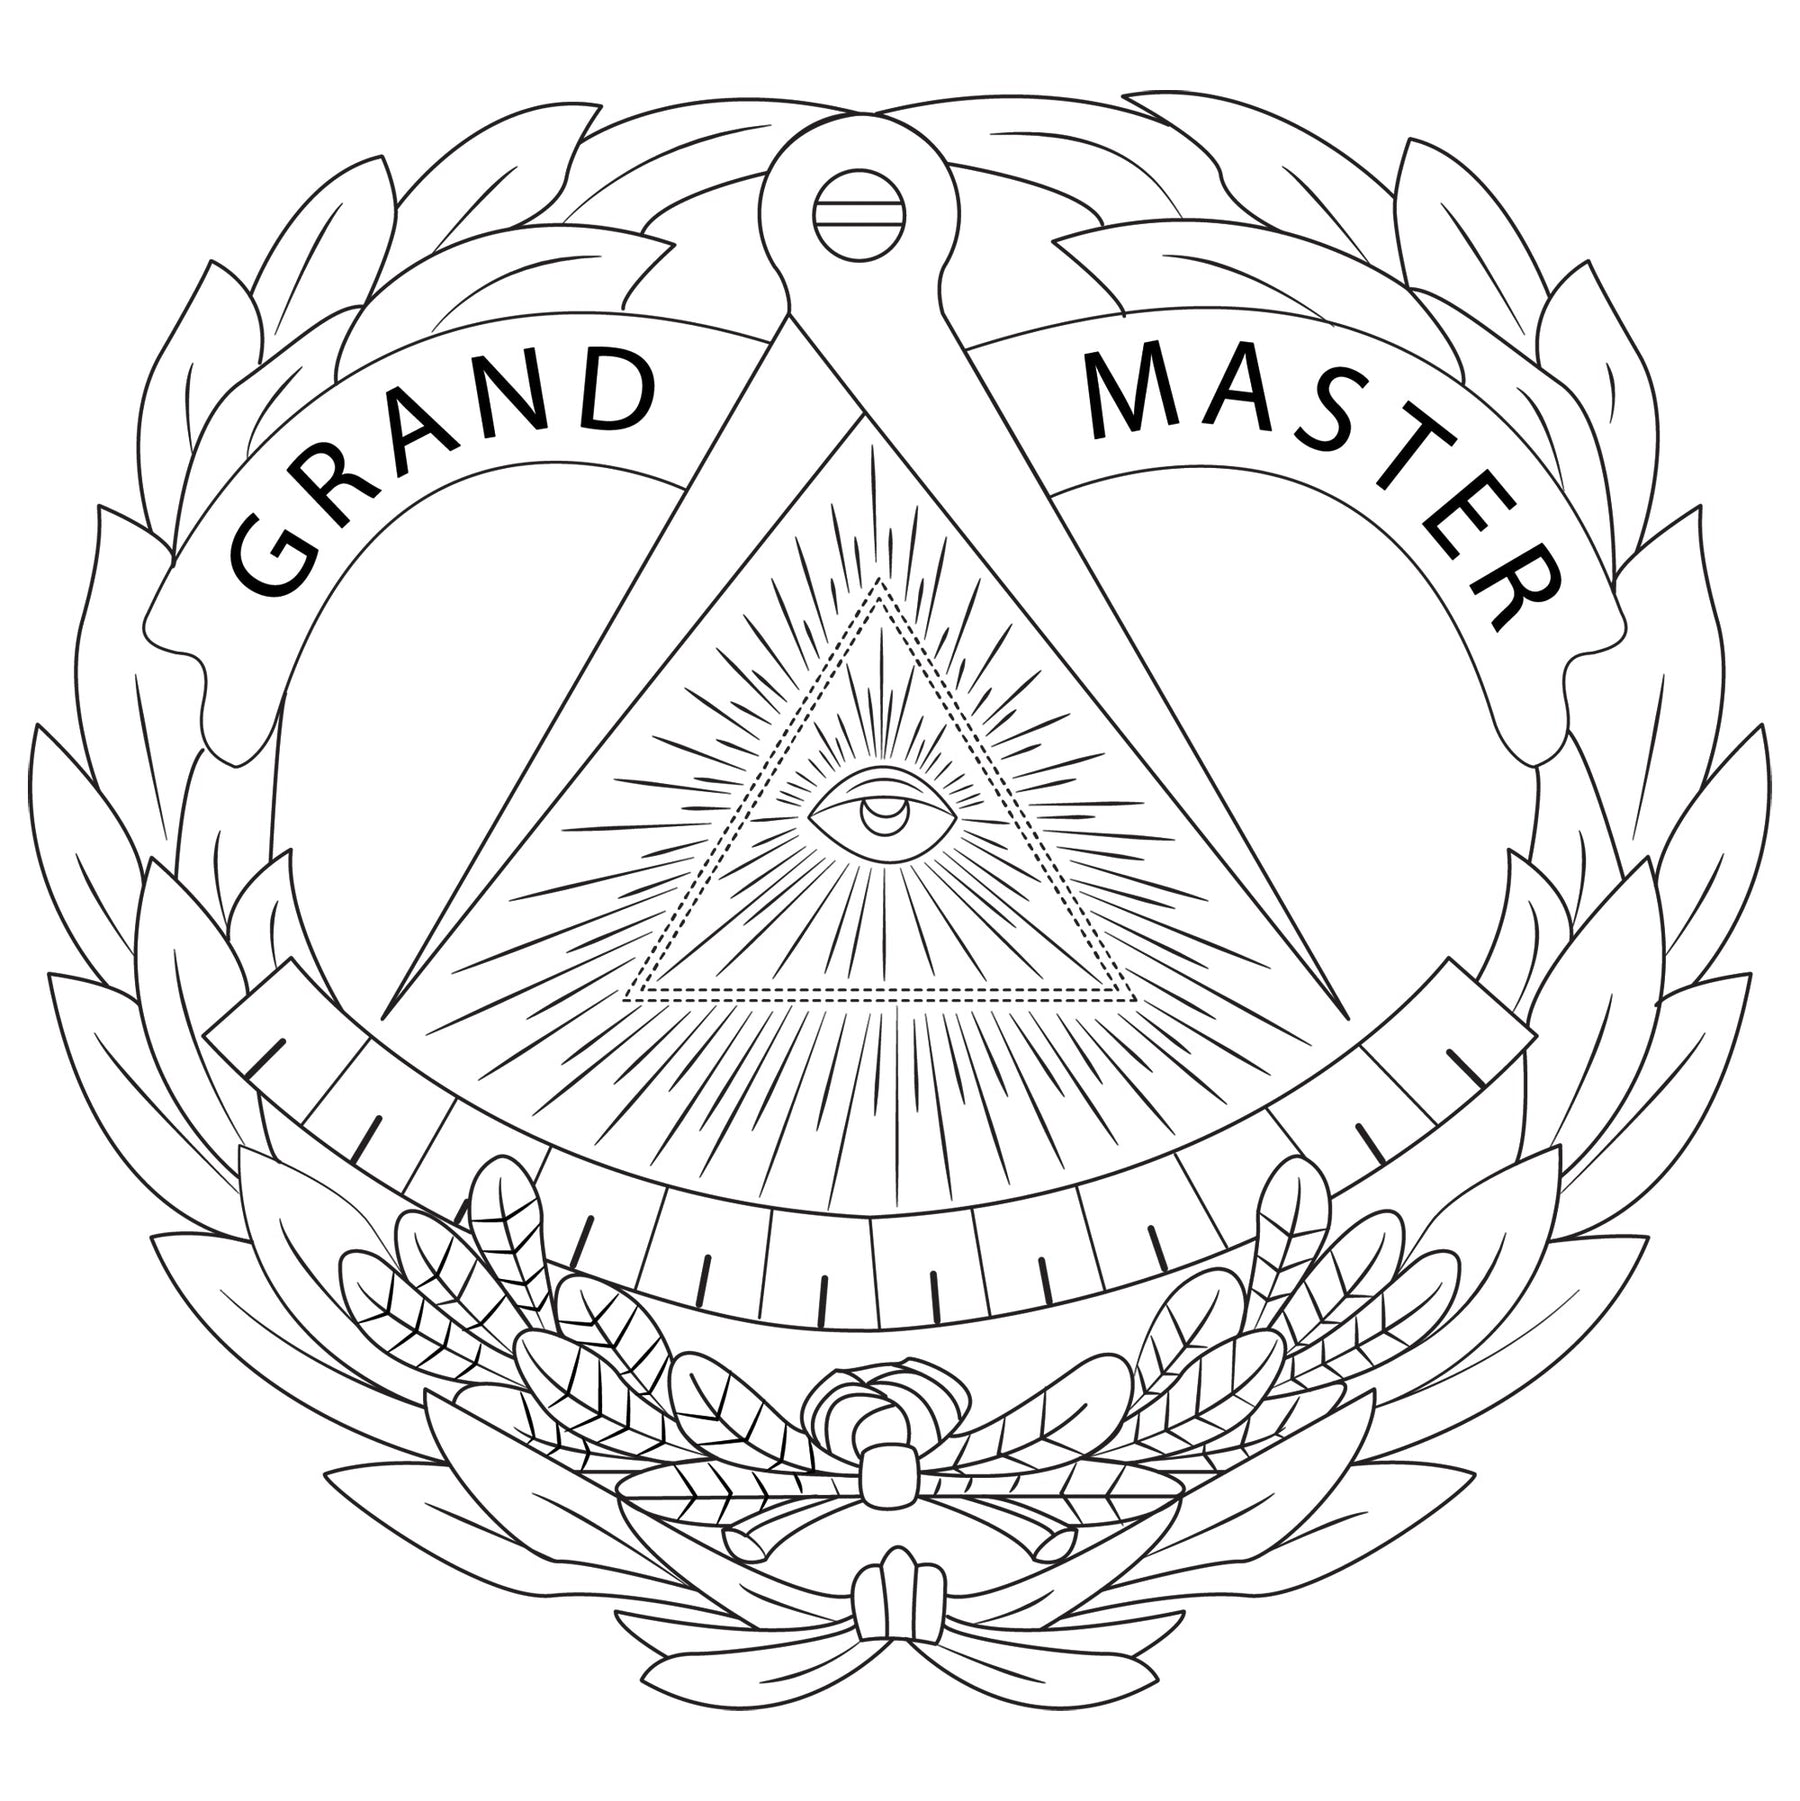 Grand Master Blue Lodge Cups - Stainless Steel - Bricks Masons